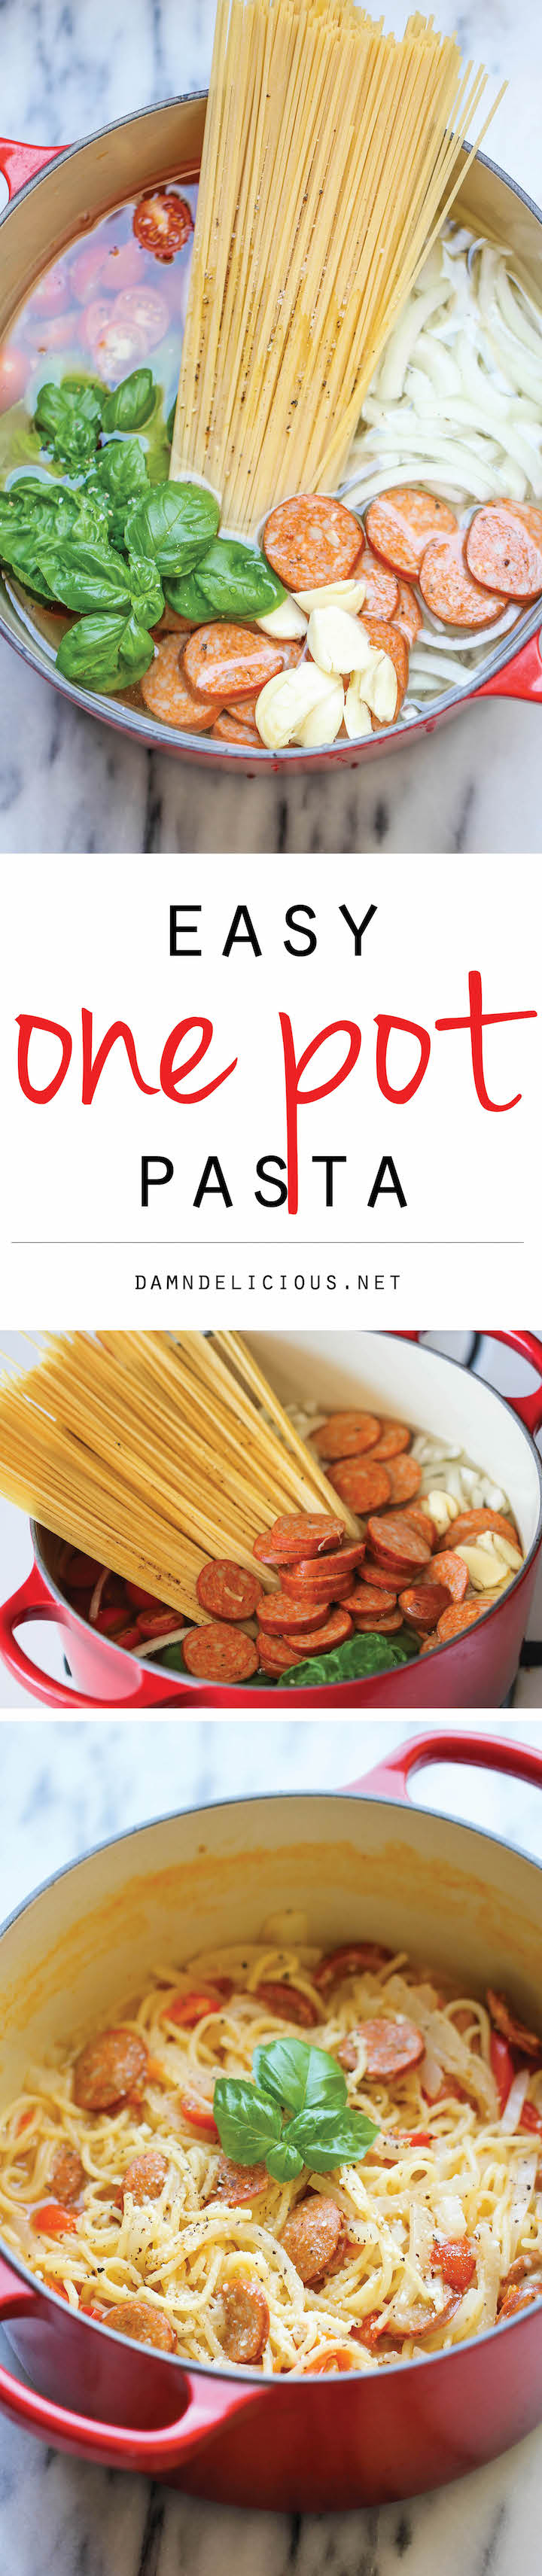 https://s23209.pcdn.co/wp-content/uploads/2014/05/One-Pot-Pasta.jpg